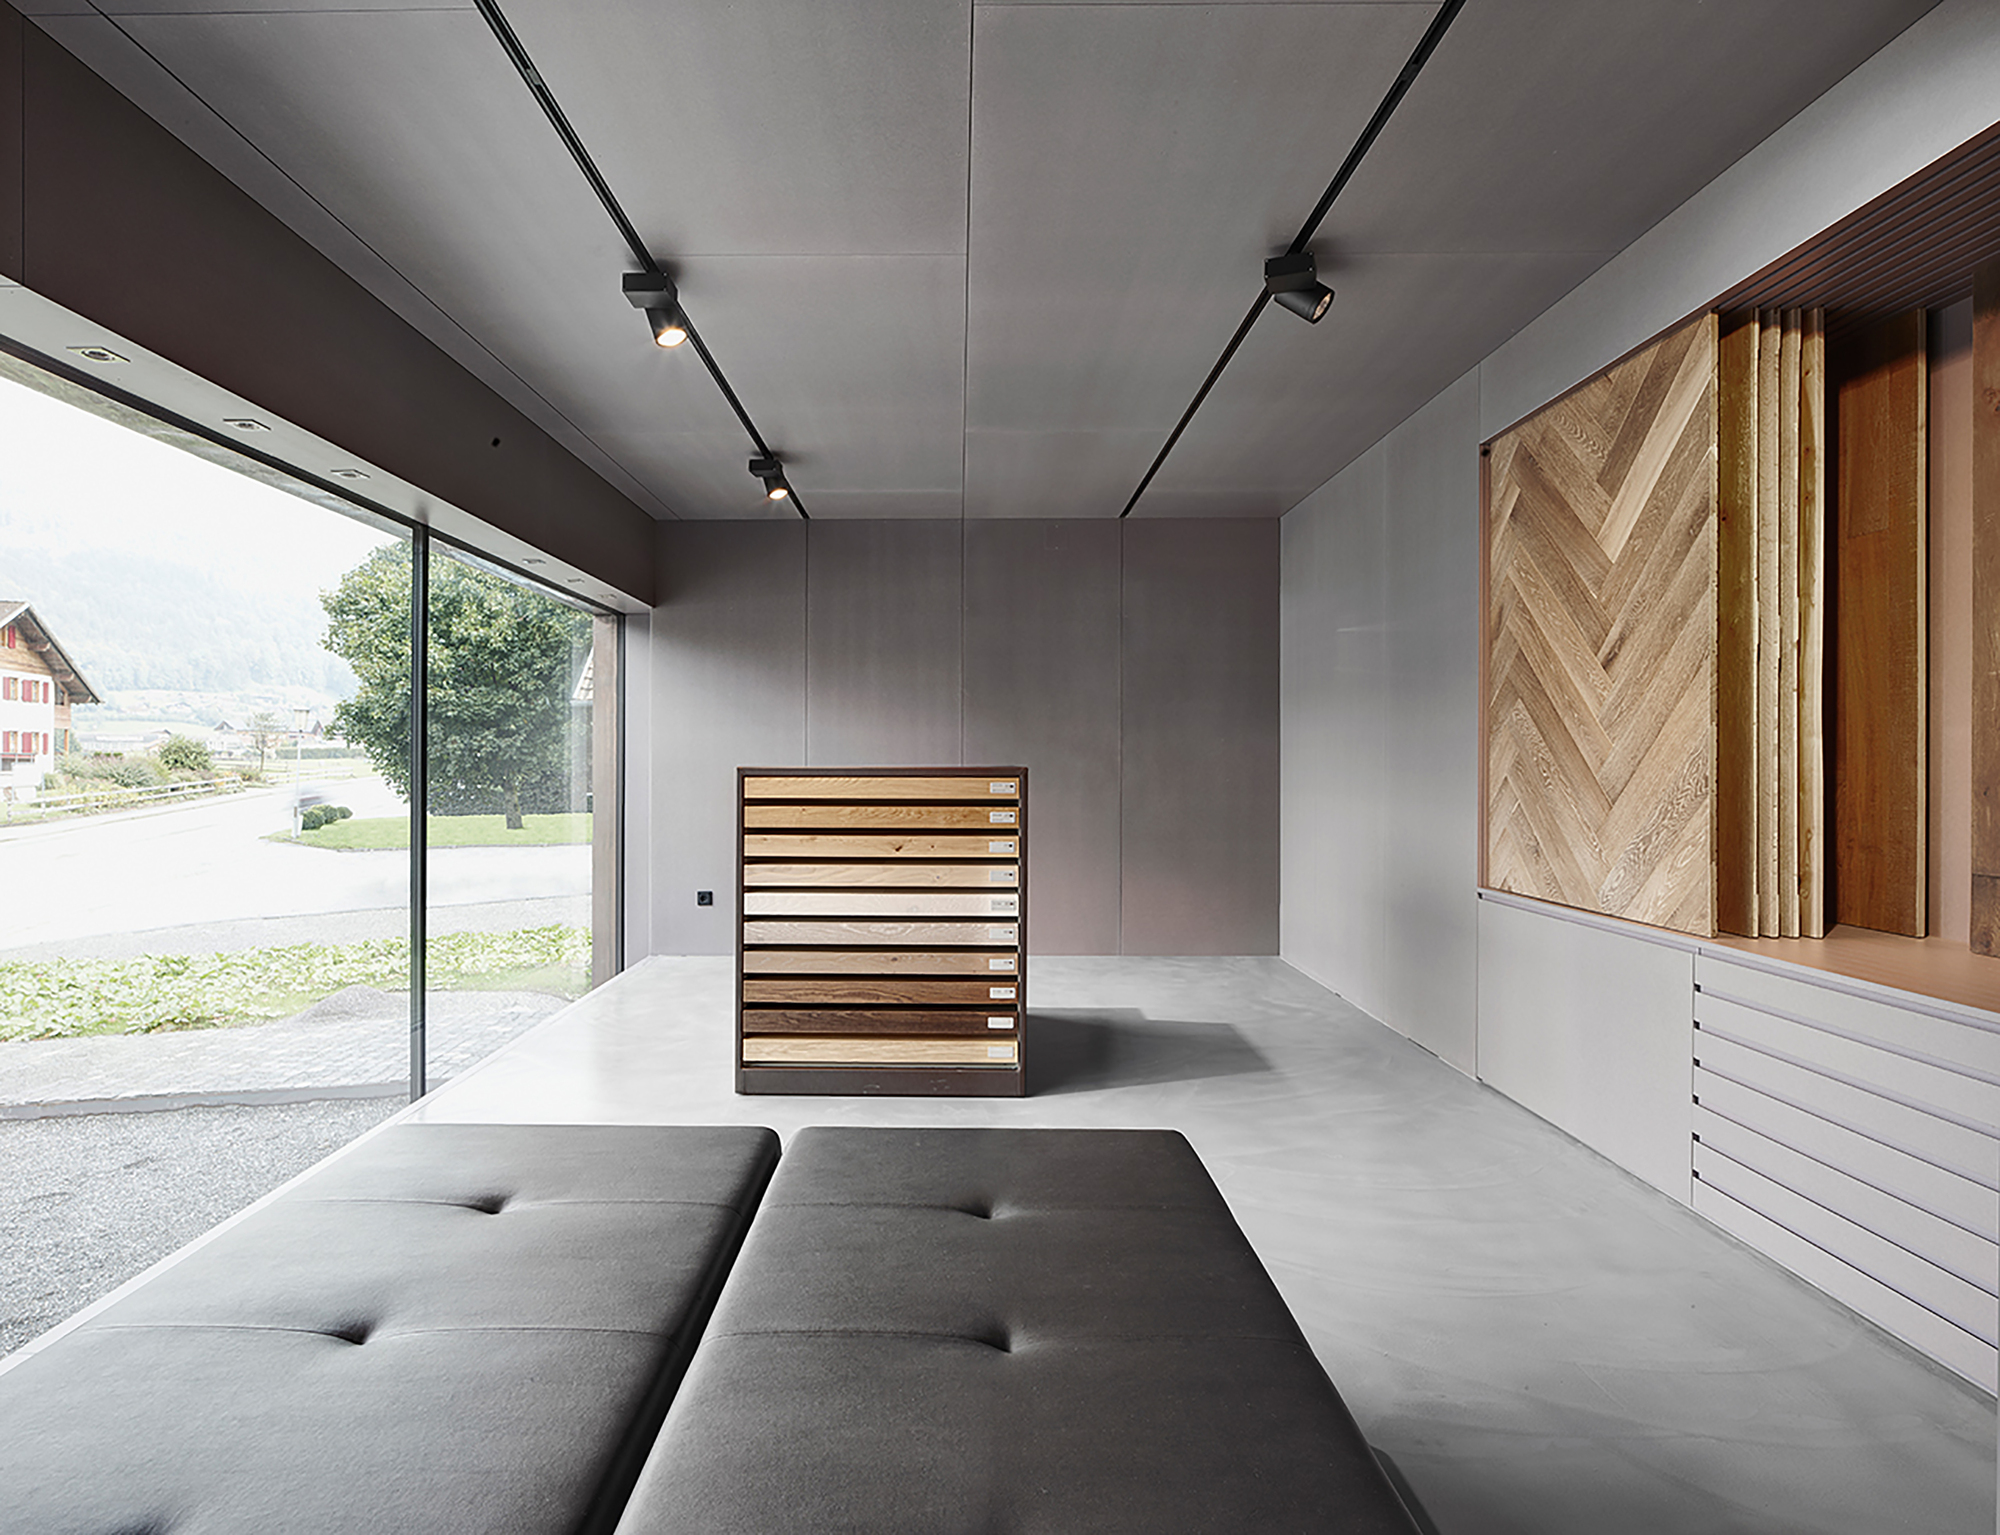 House Showroom / Markus Innauer (6)